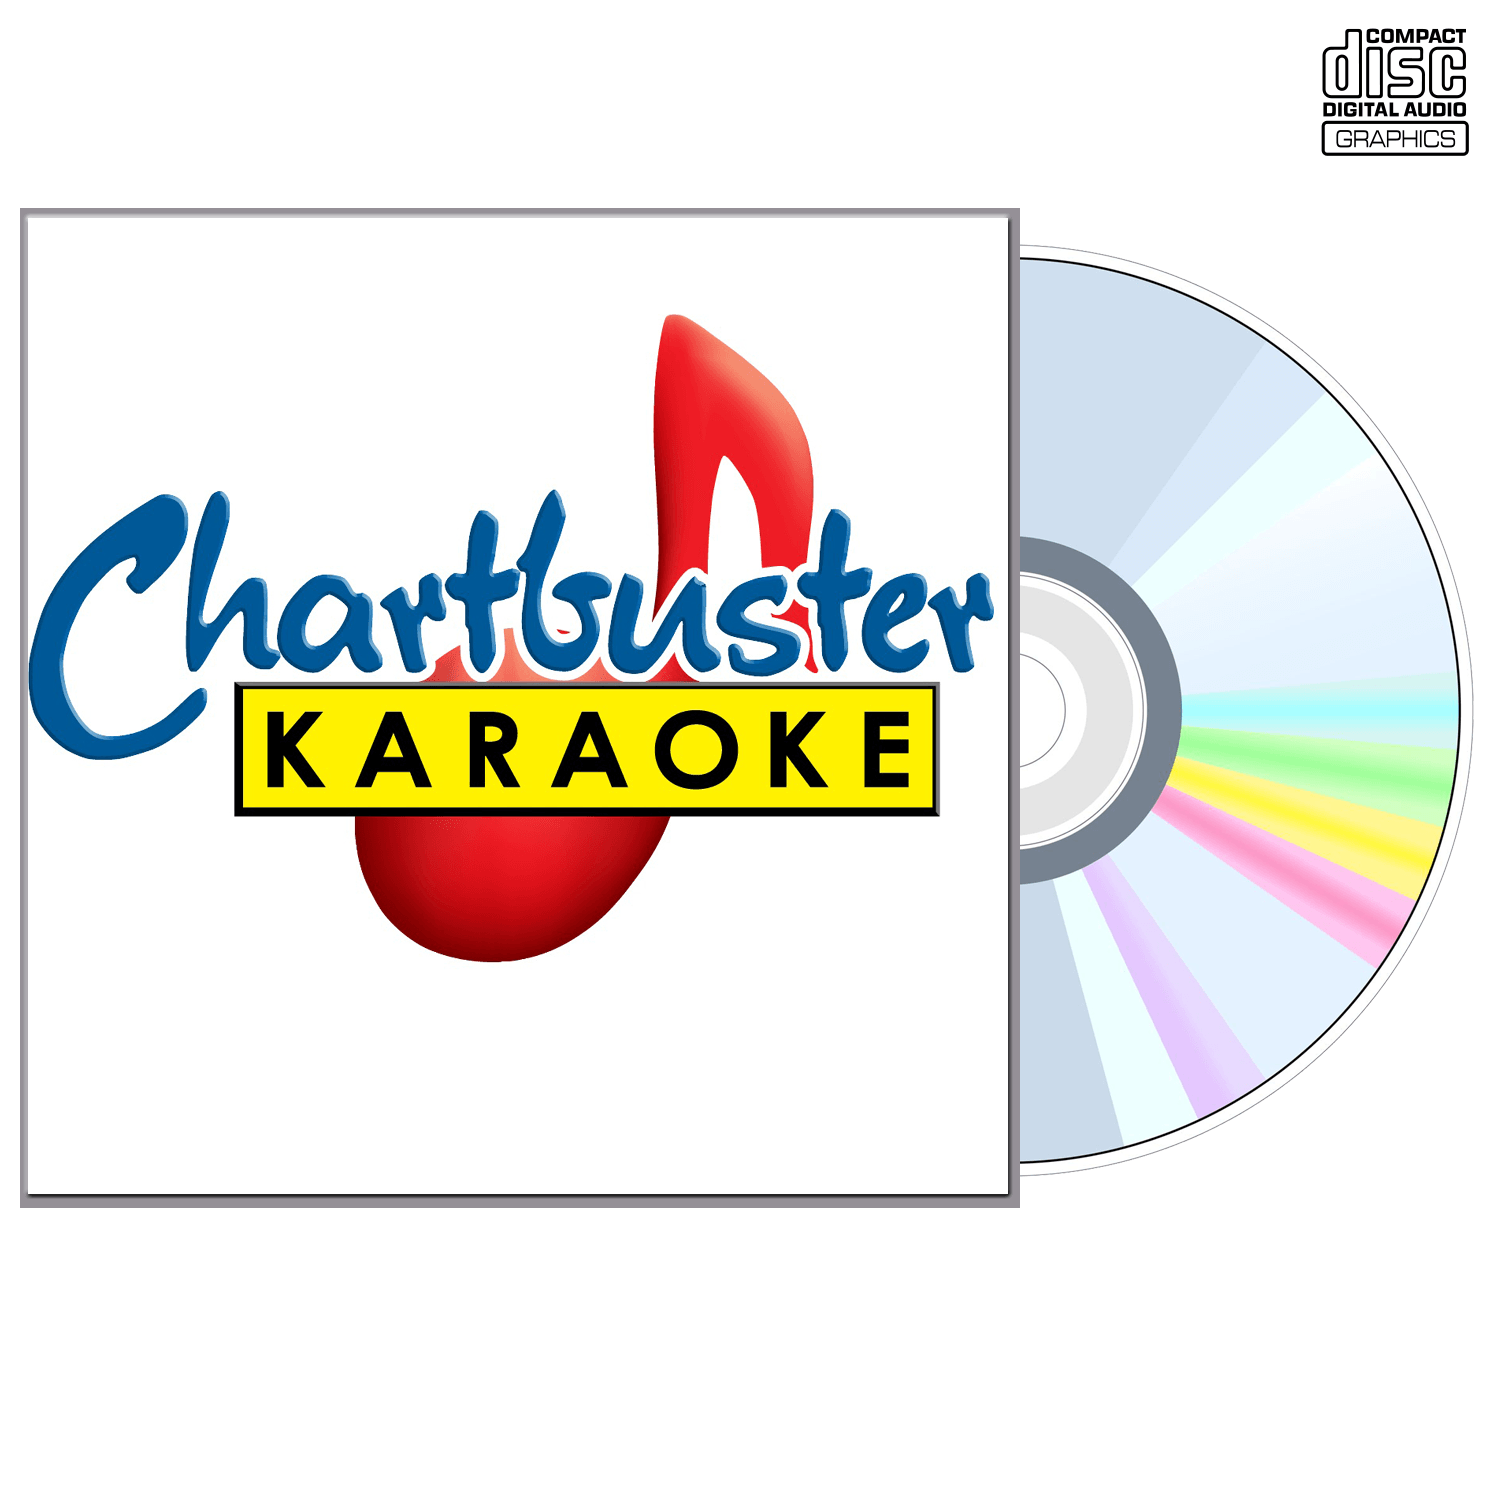 Jolie And Wanted - CD+G - Chartbuster Karaoke - Karaoke Home Entertainment